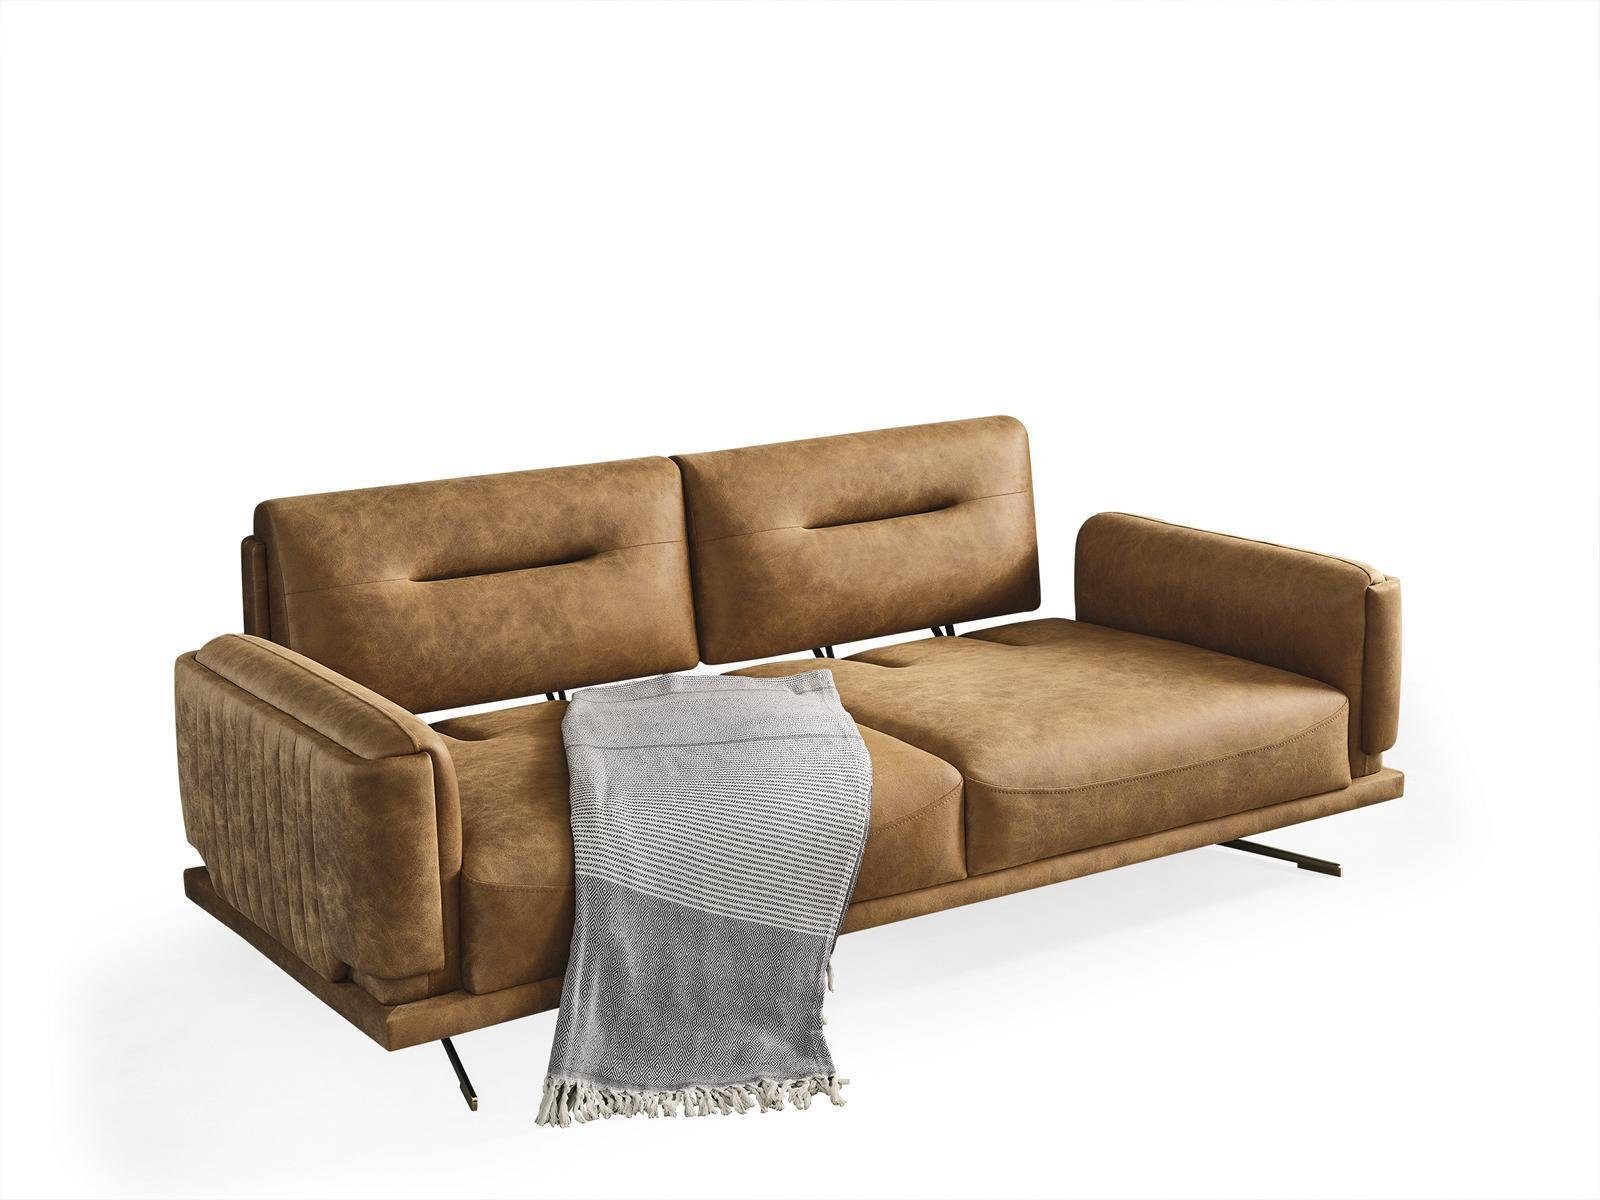 Luxus Neu, Edles Made Stilvolle 1 Design Moderner 3-er Teile, JVmoebel Europe Sofa Möbel Dreisitzer in Beiger